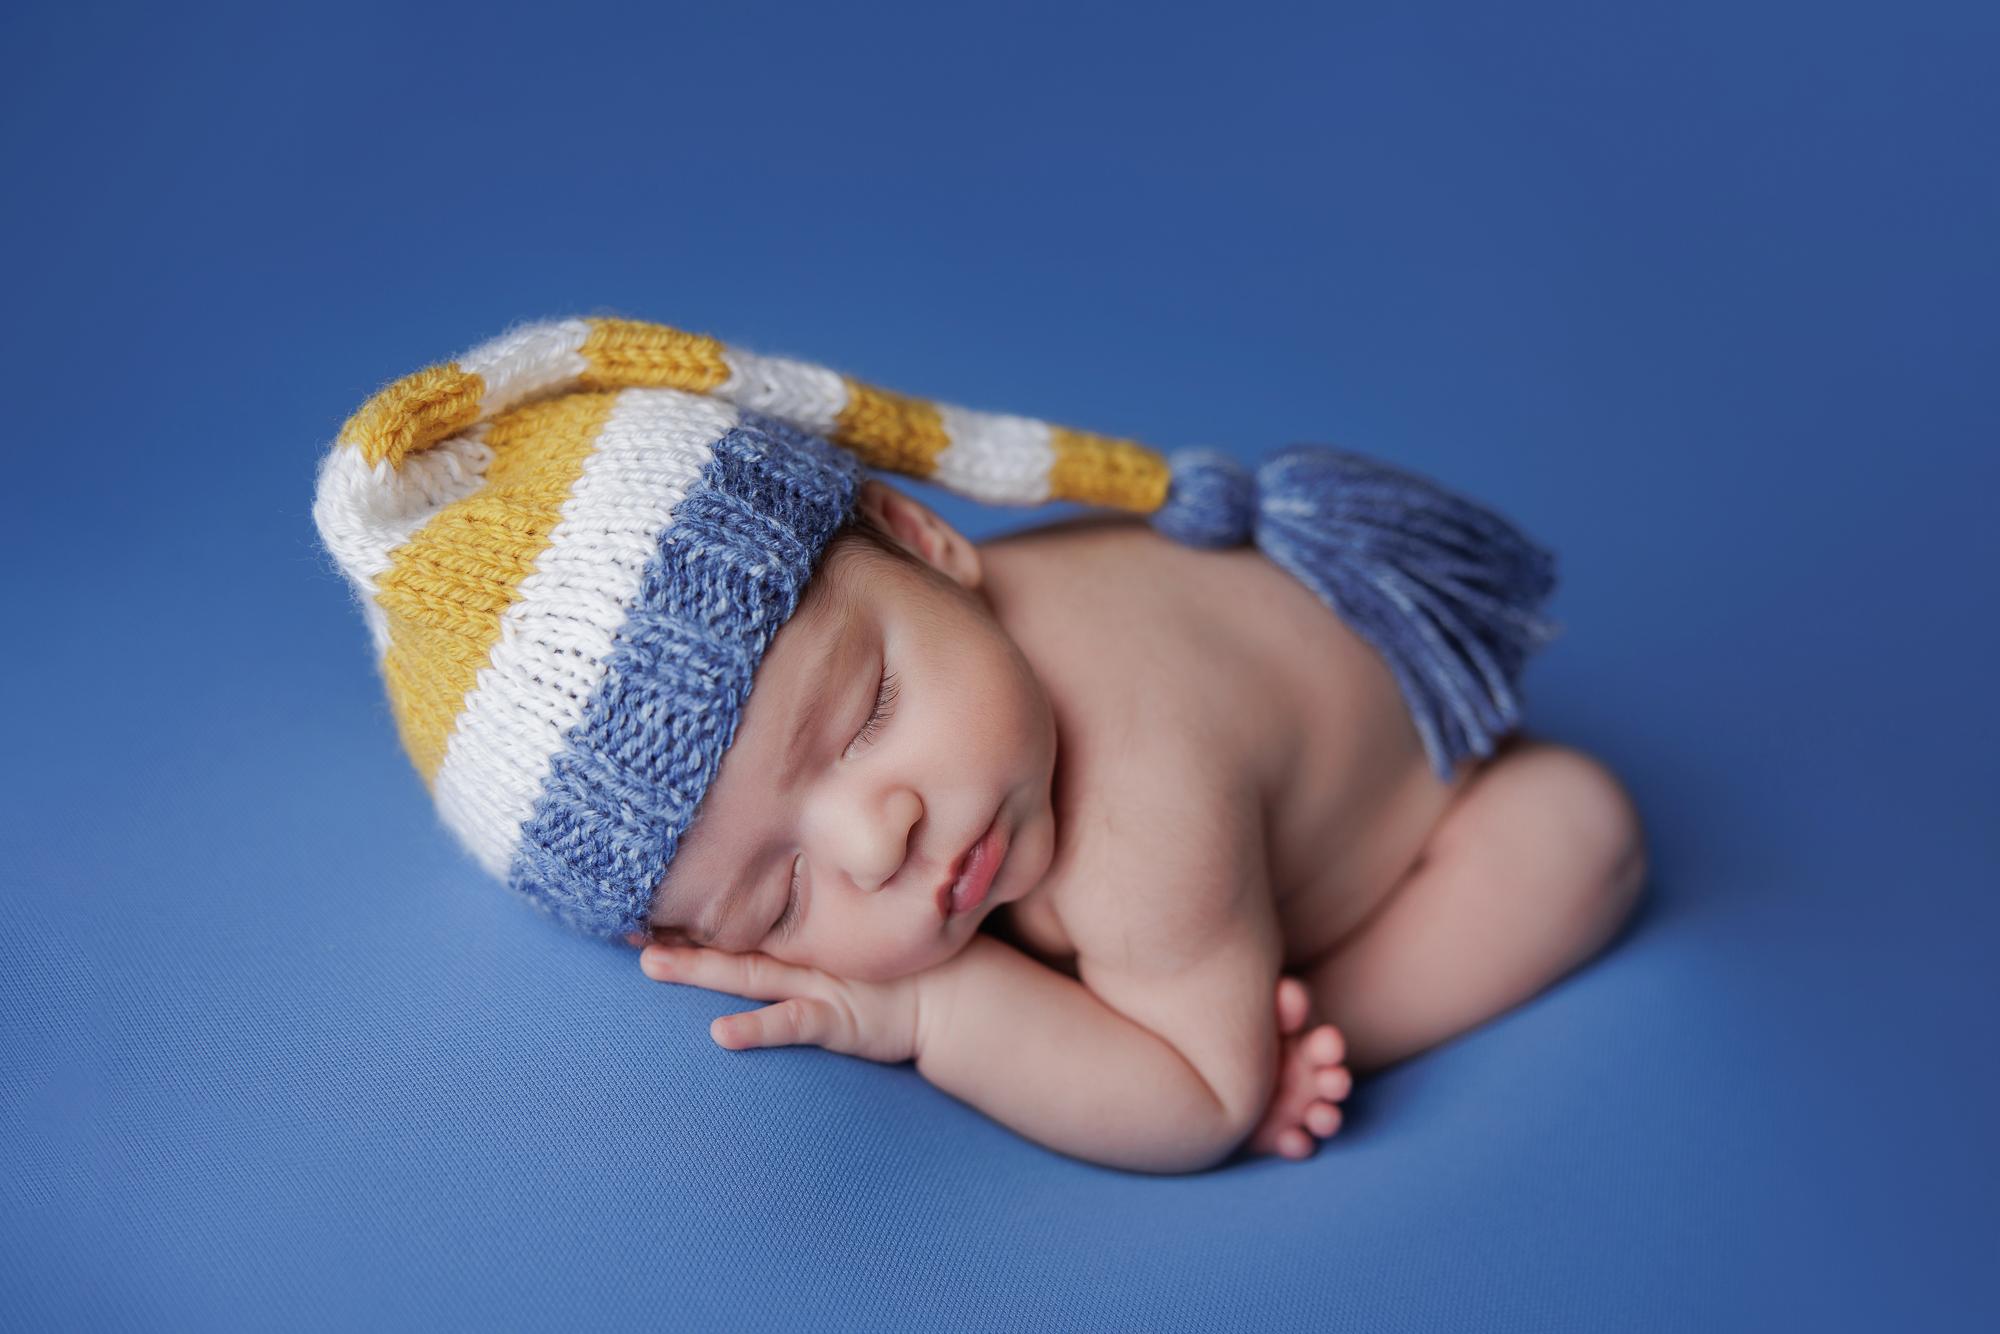 newborn photography by amanda dams - baby wearing a hat on blue backdrop